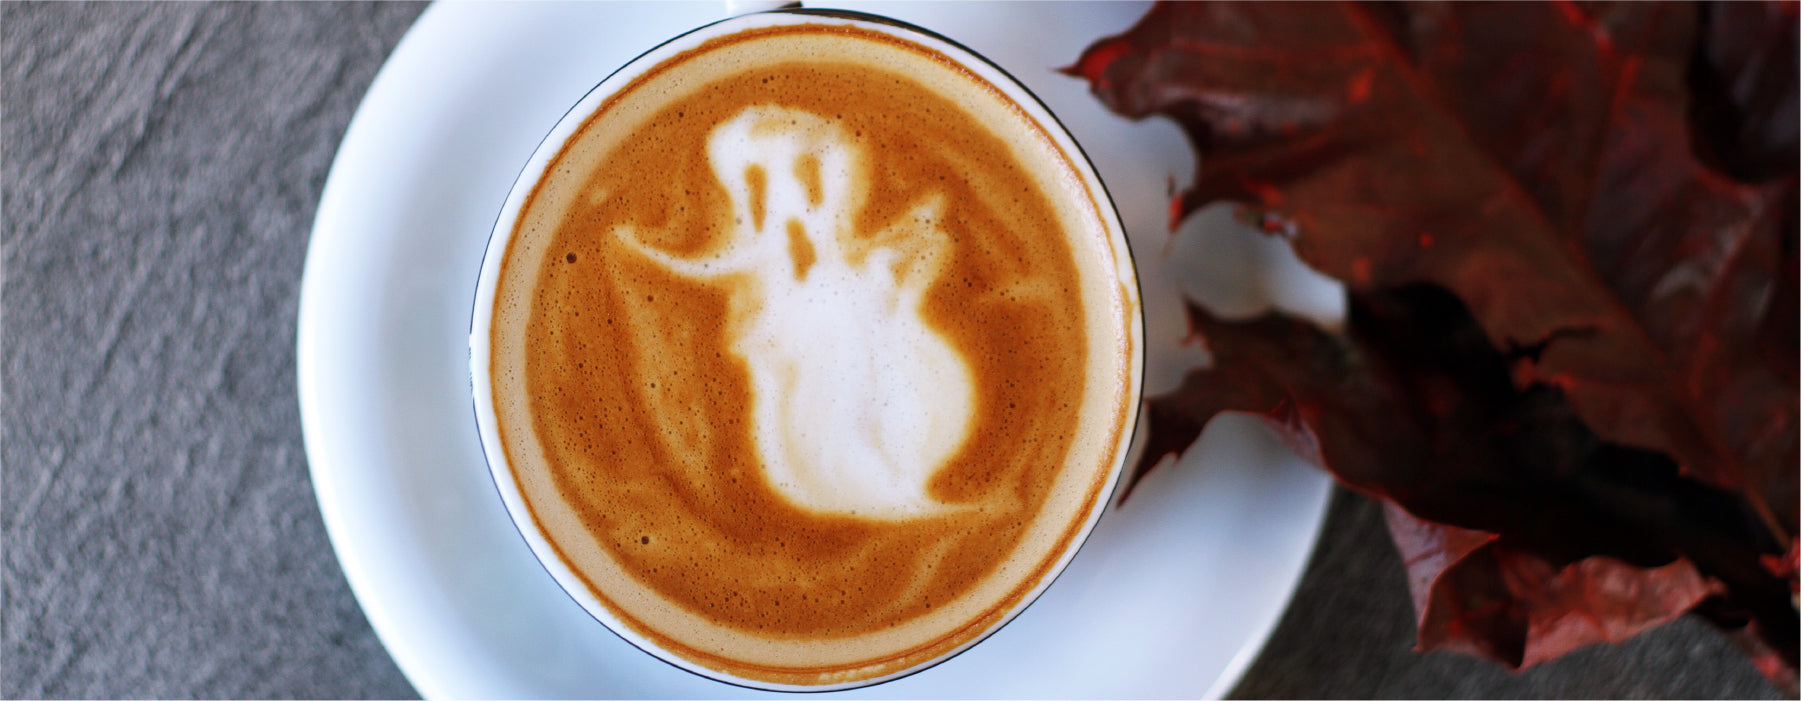 Making Spooky Halloween Latte Art - Coffee Life by EspressoWorks